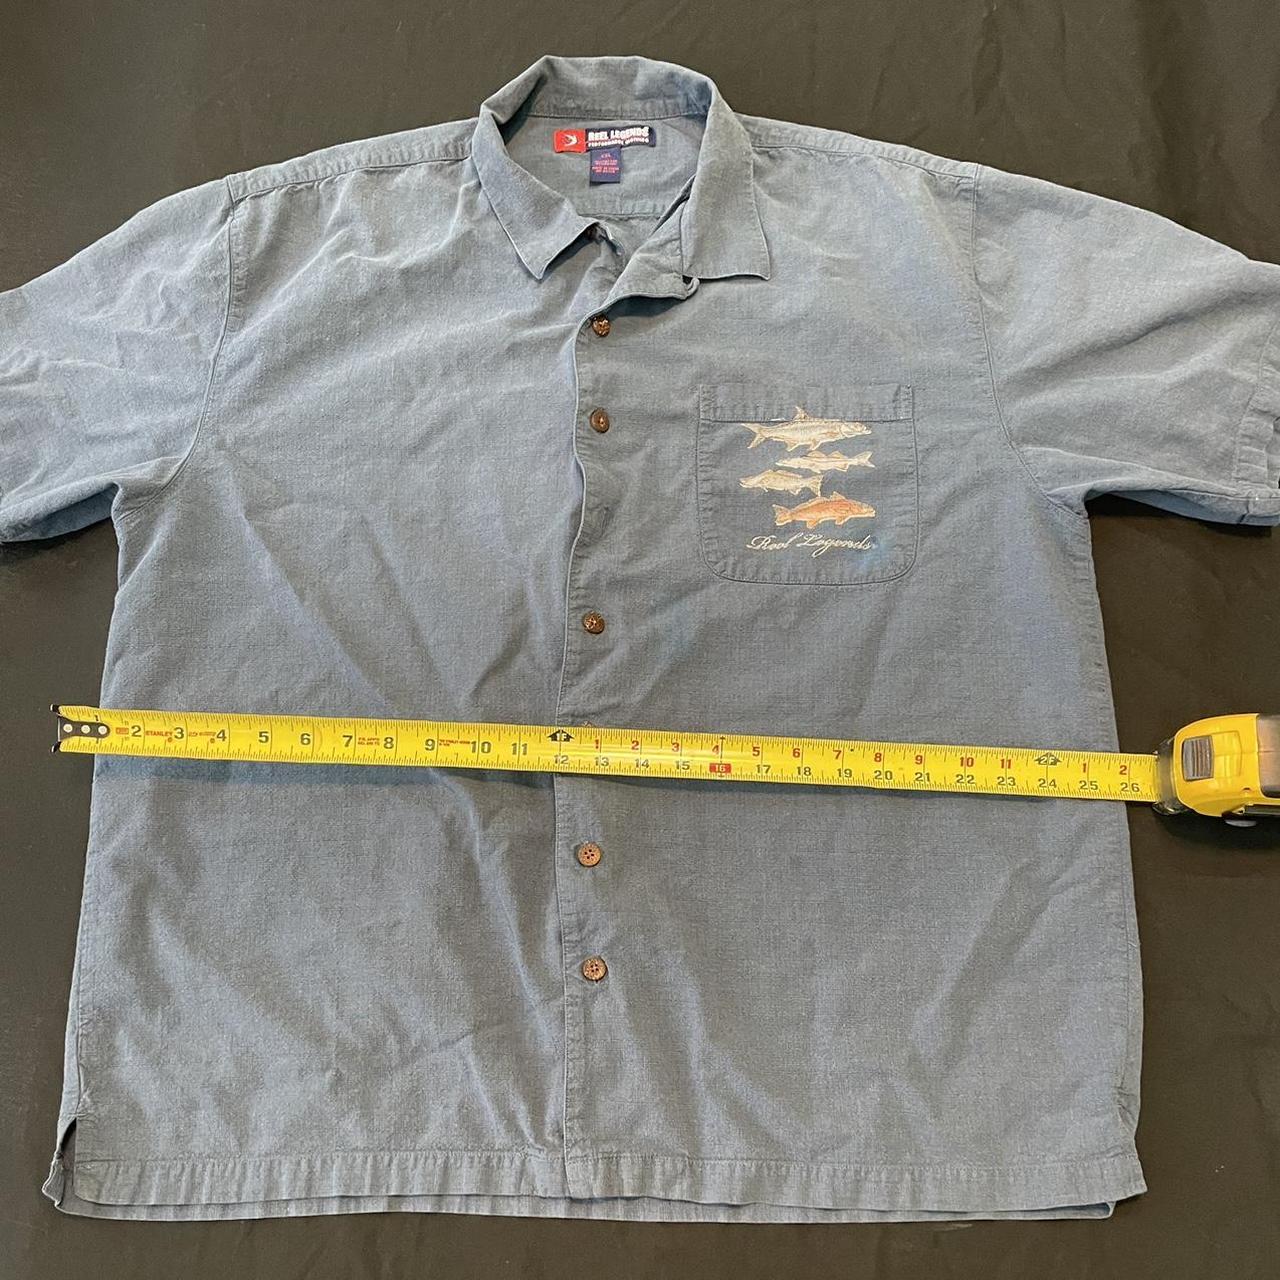 Vintage Reel Legends Fishing Shirt Size XXL This - Depop